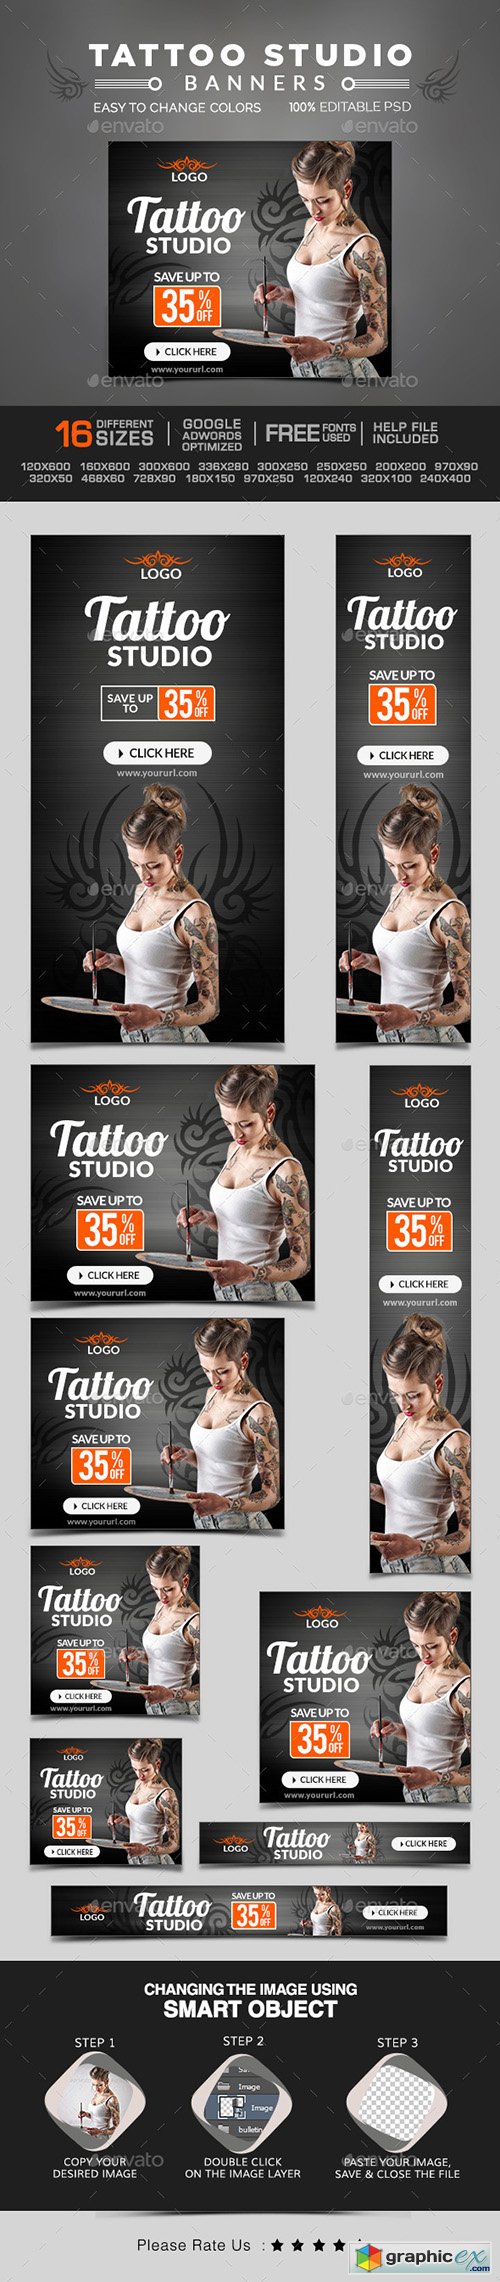 Tatto Studio Banners